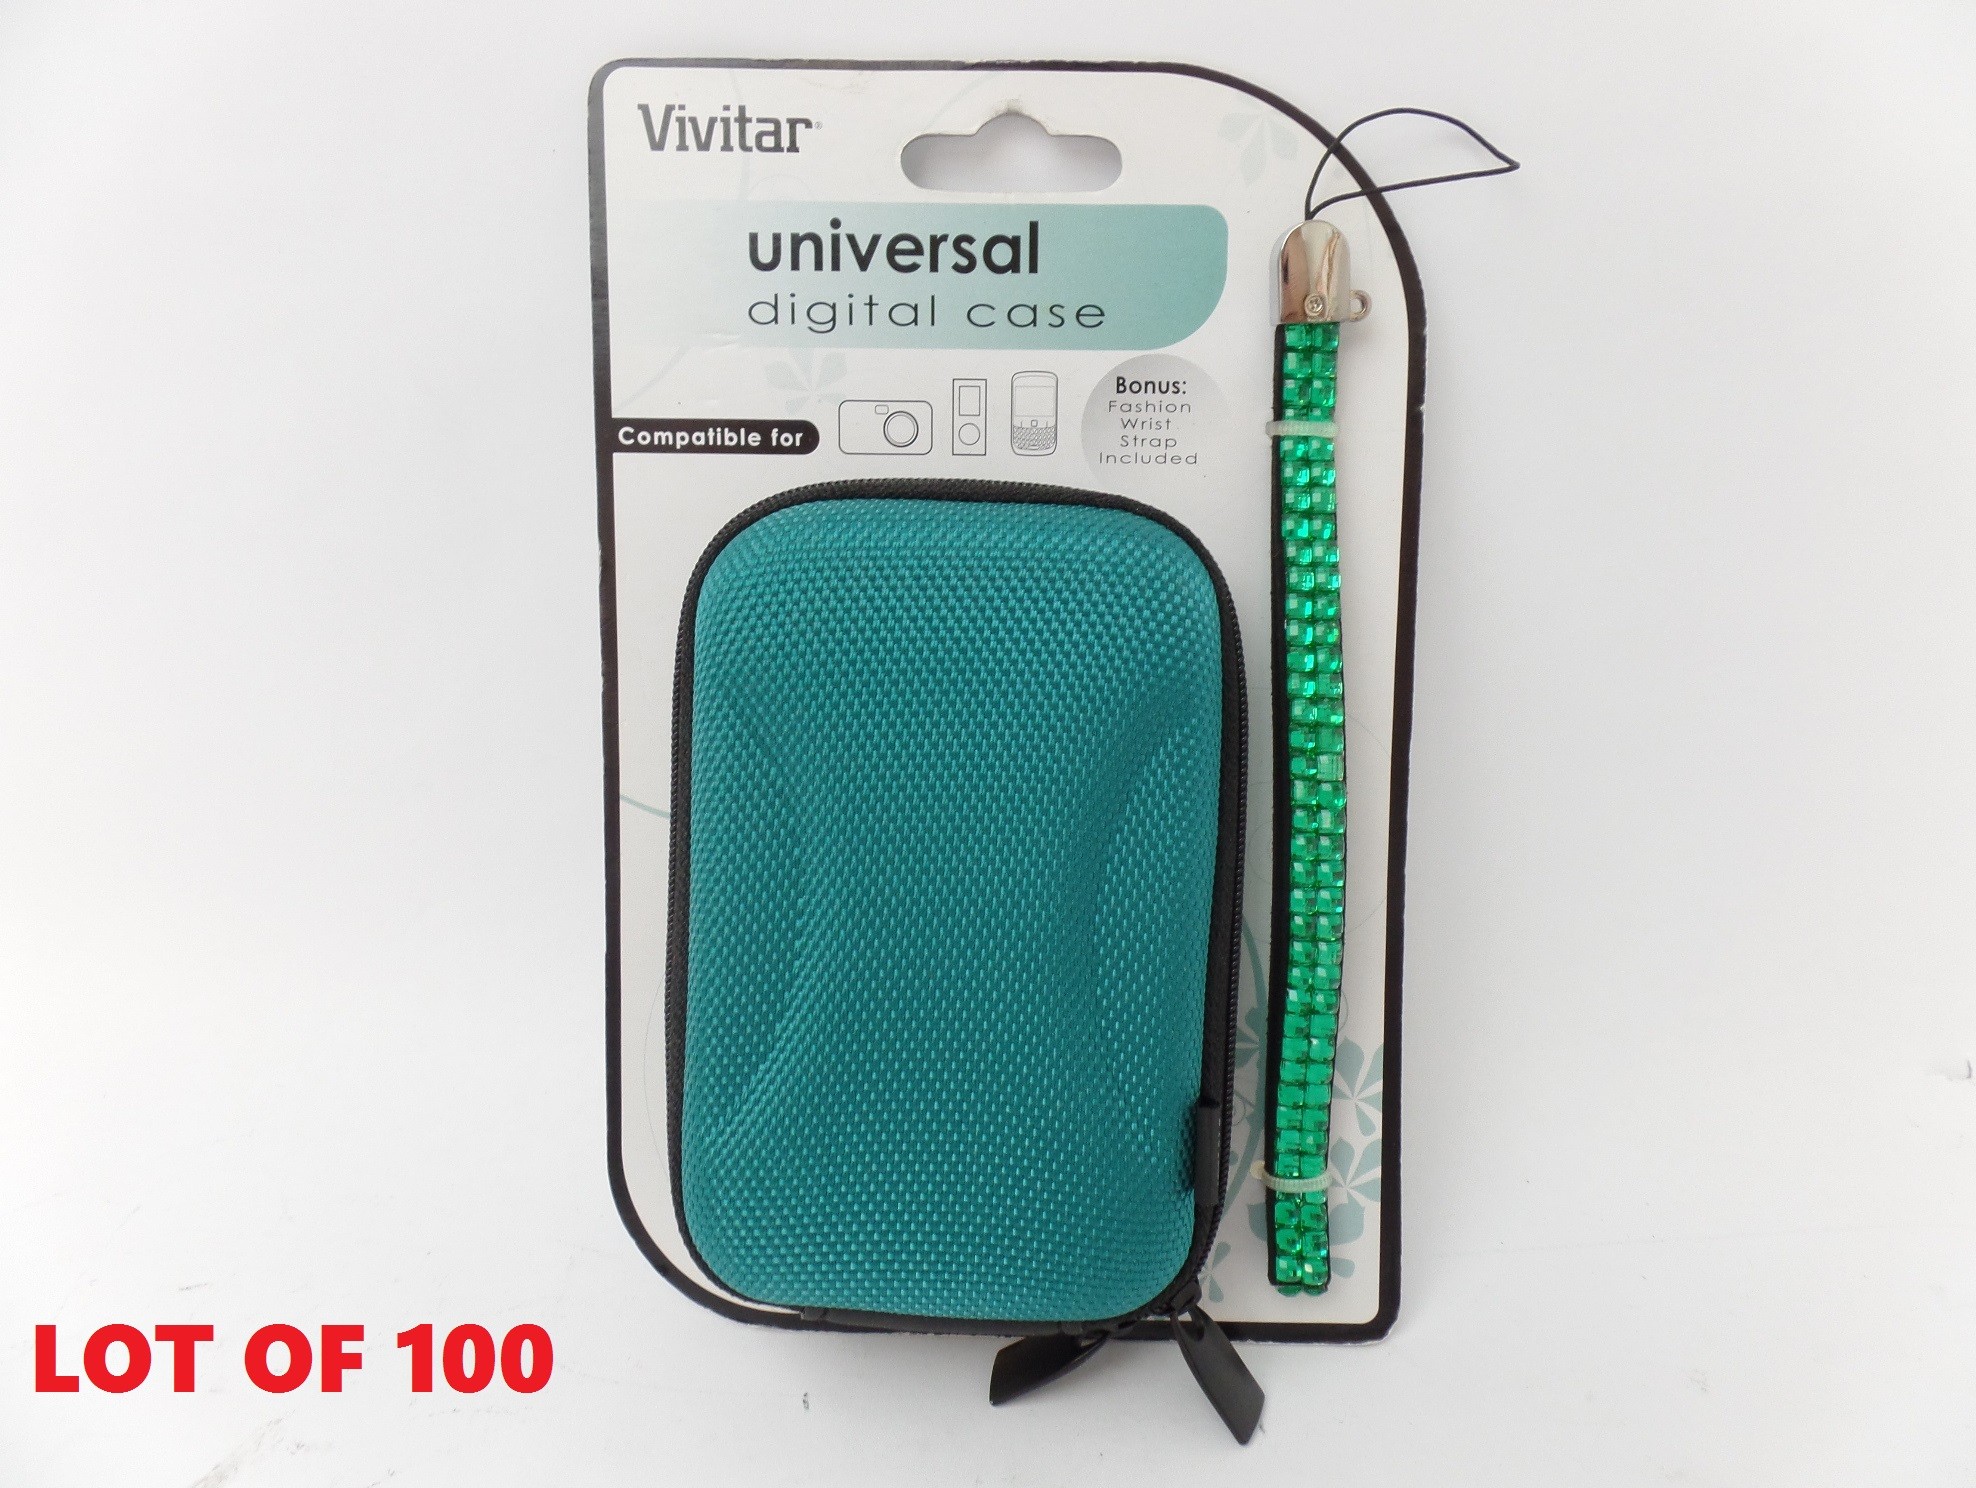 Lot of 100 Vivitar Universal Hard Case for Digital Camera MP3 Player Wrist Strap